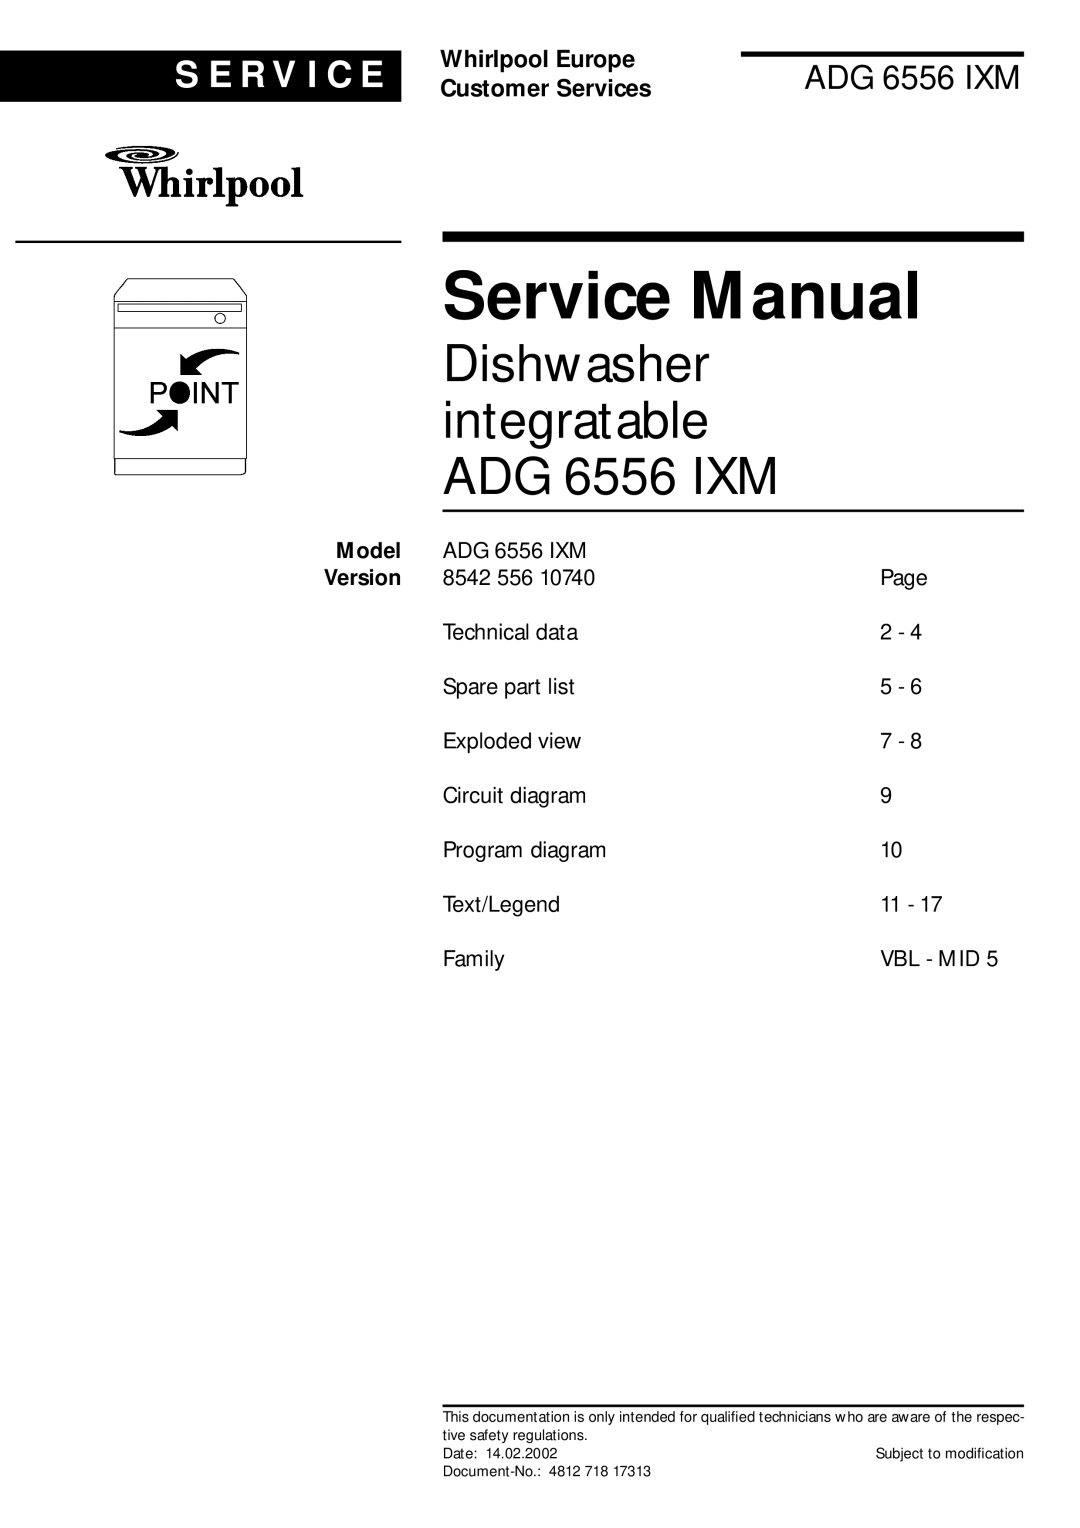 Whirlpool service manual Model, Dishwasher integratable ADG 6556 IXM, S E R V I C E, Whirlpool Europe 